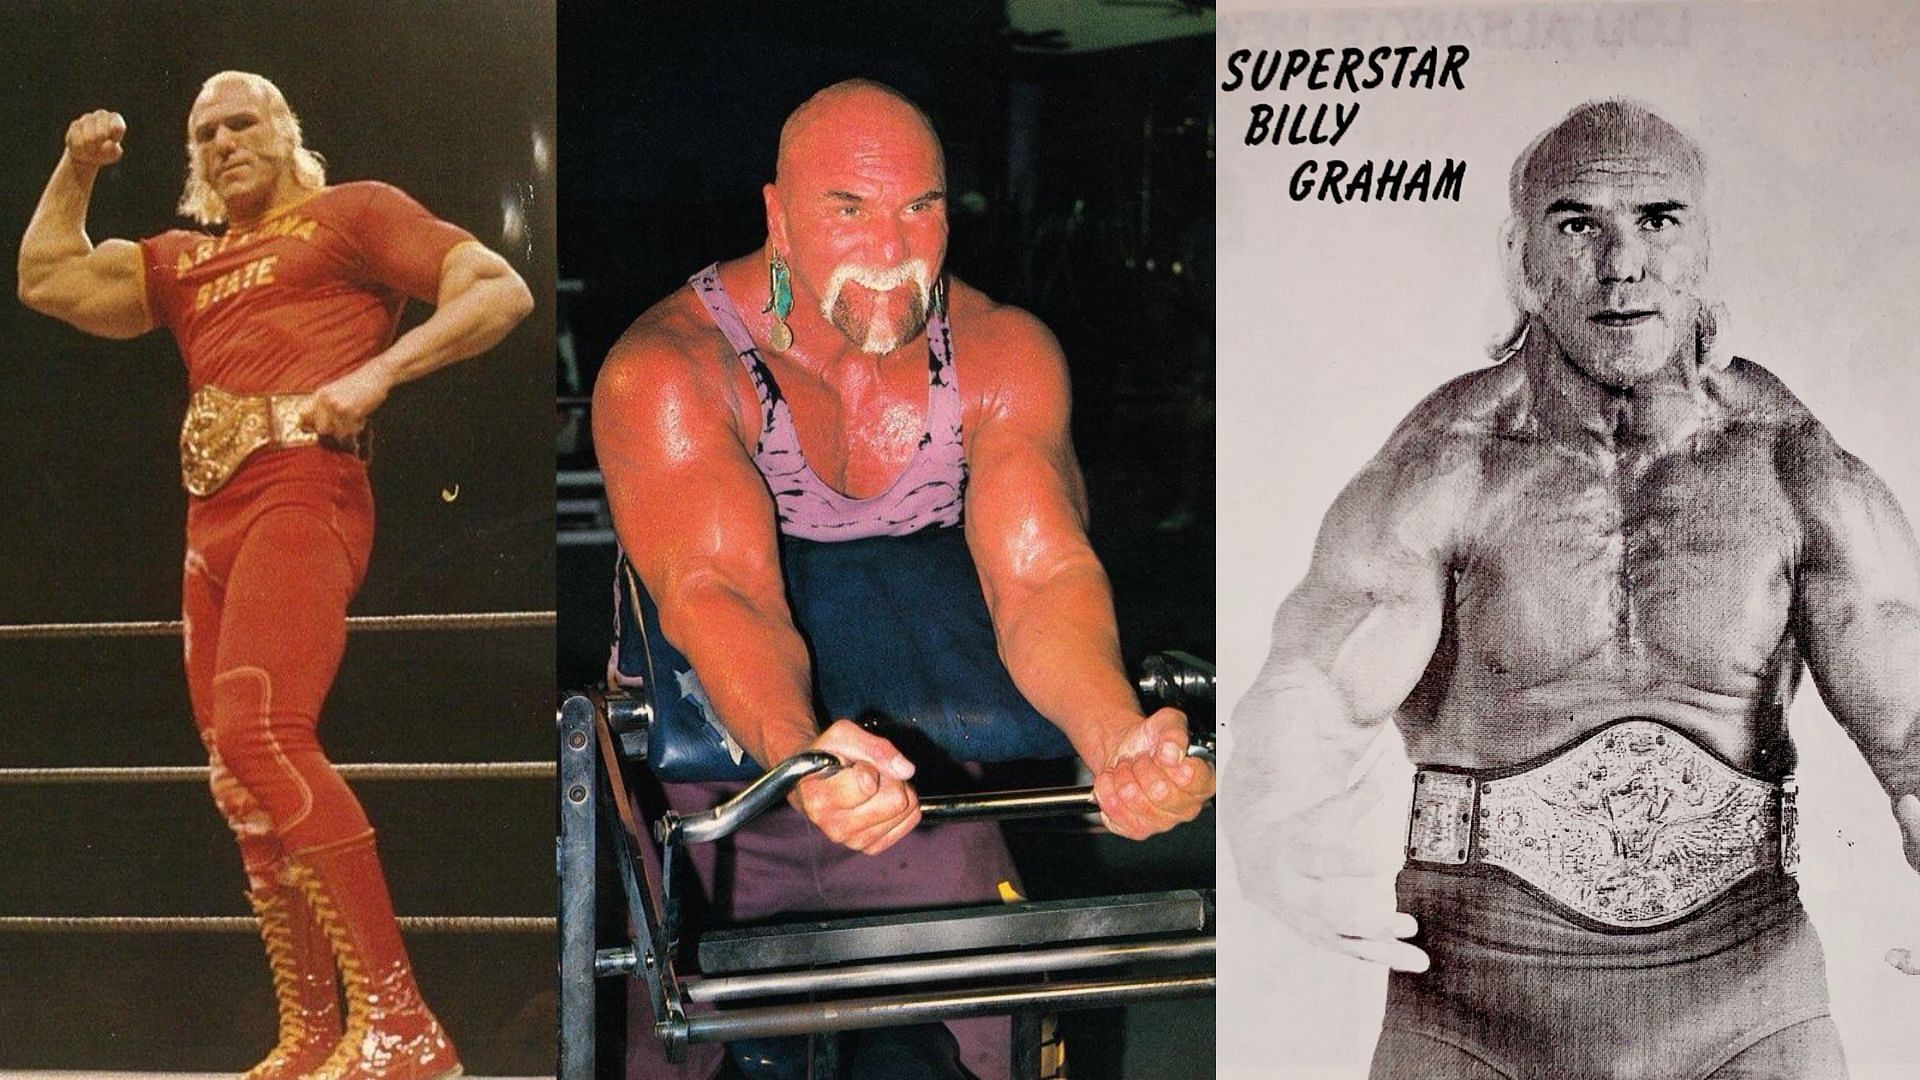 Billy Graham was bodybuilder before entering competitive wrestling